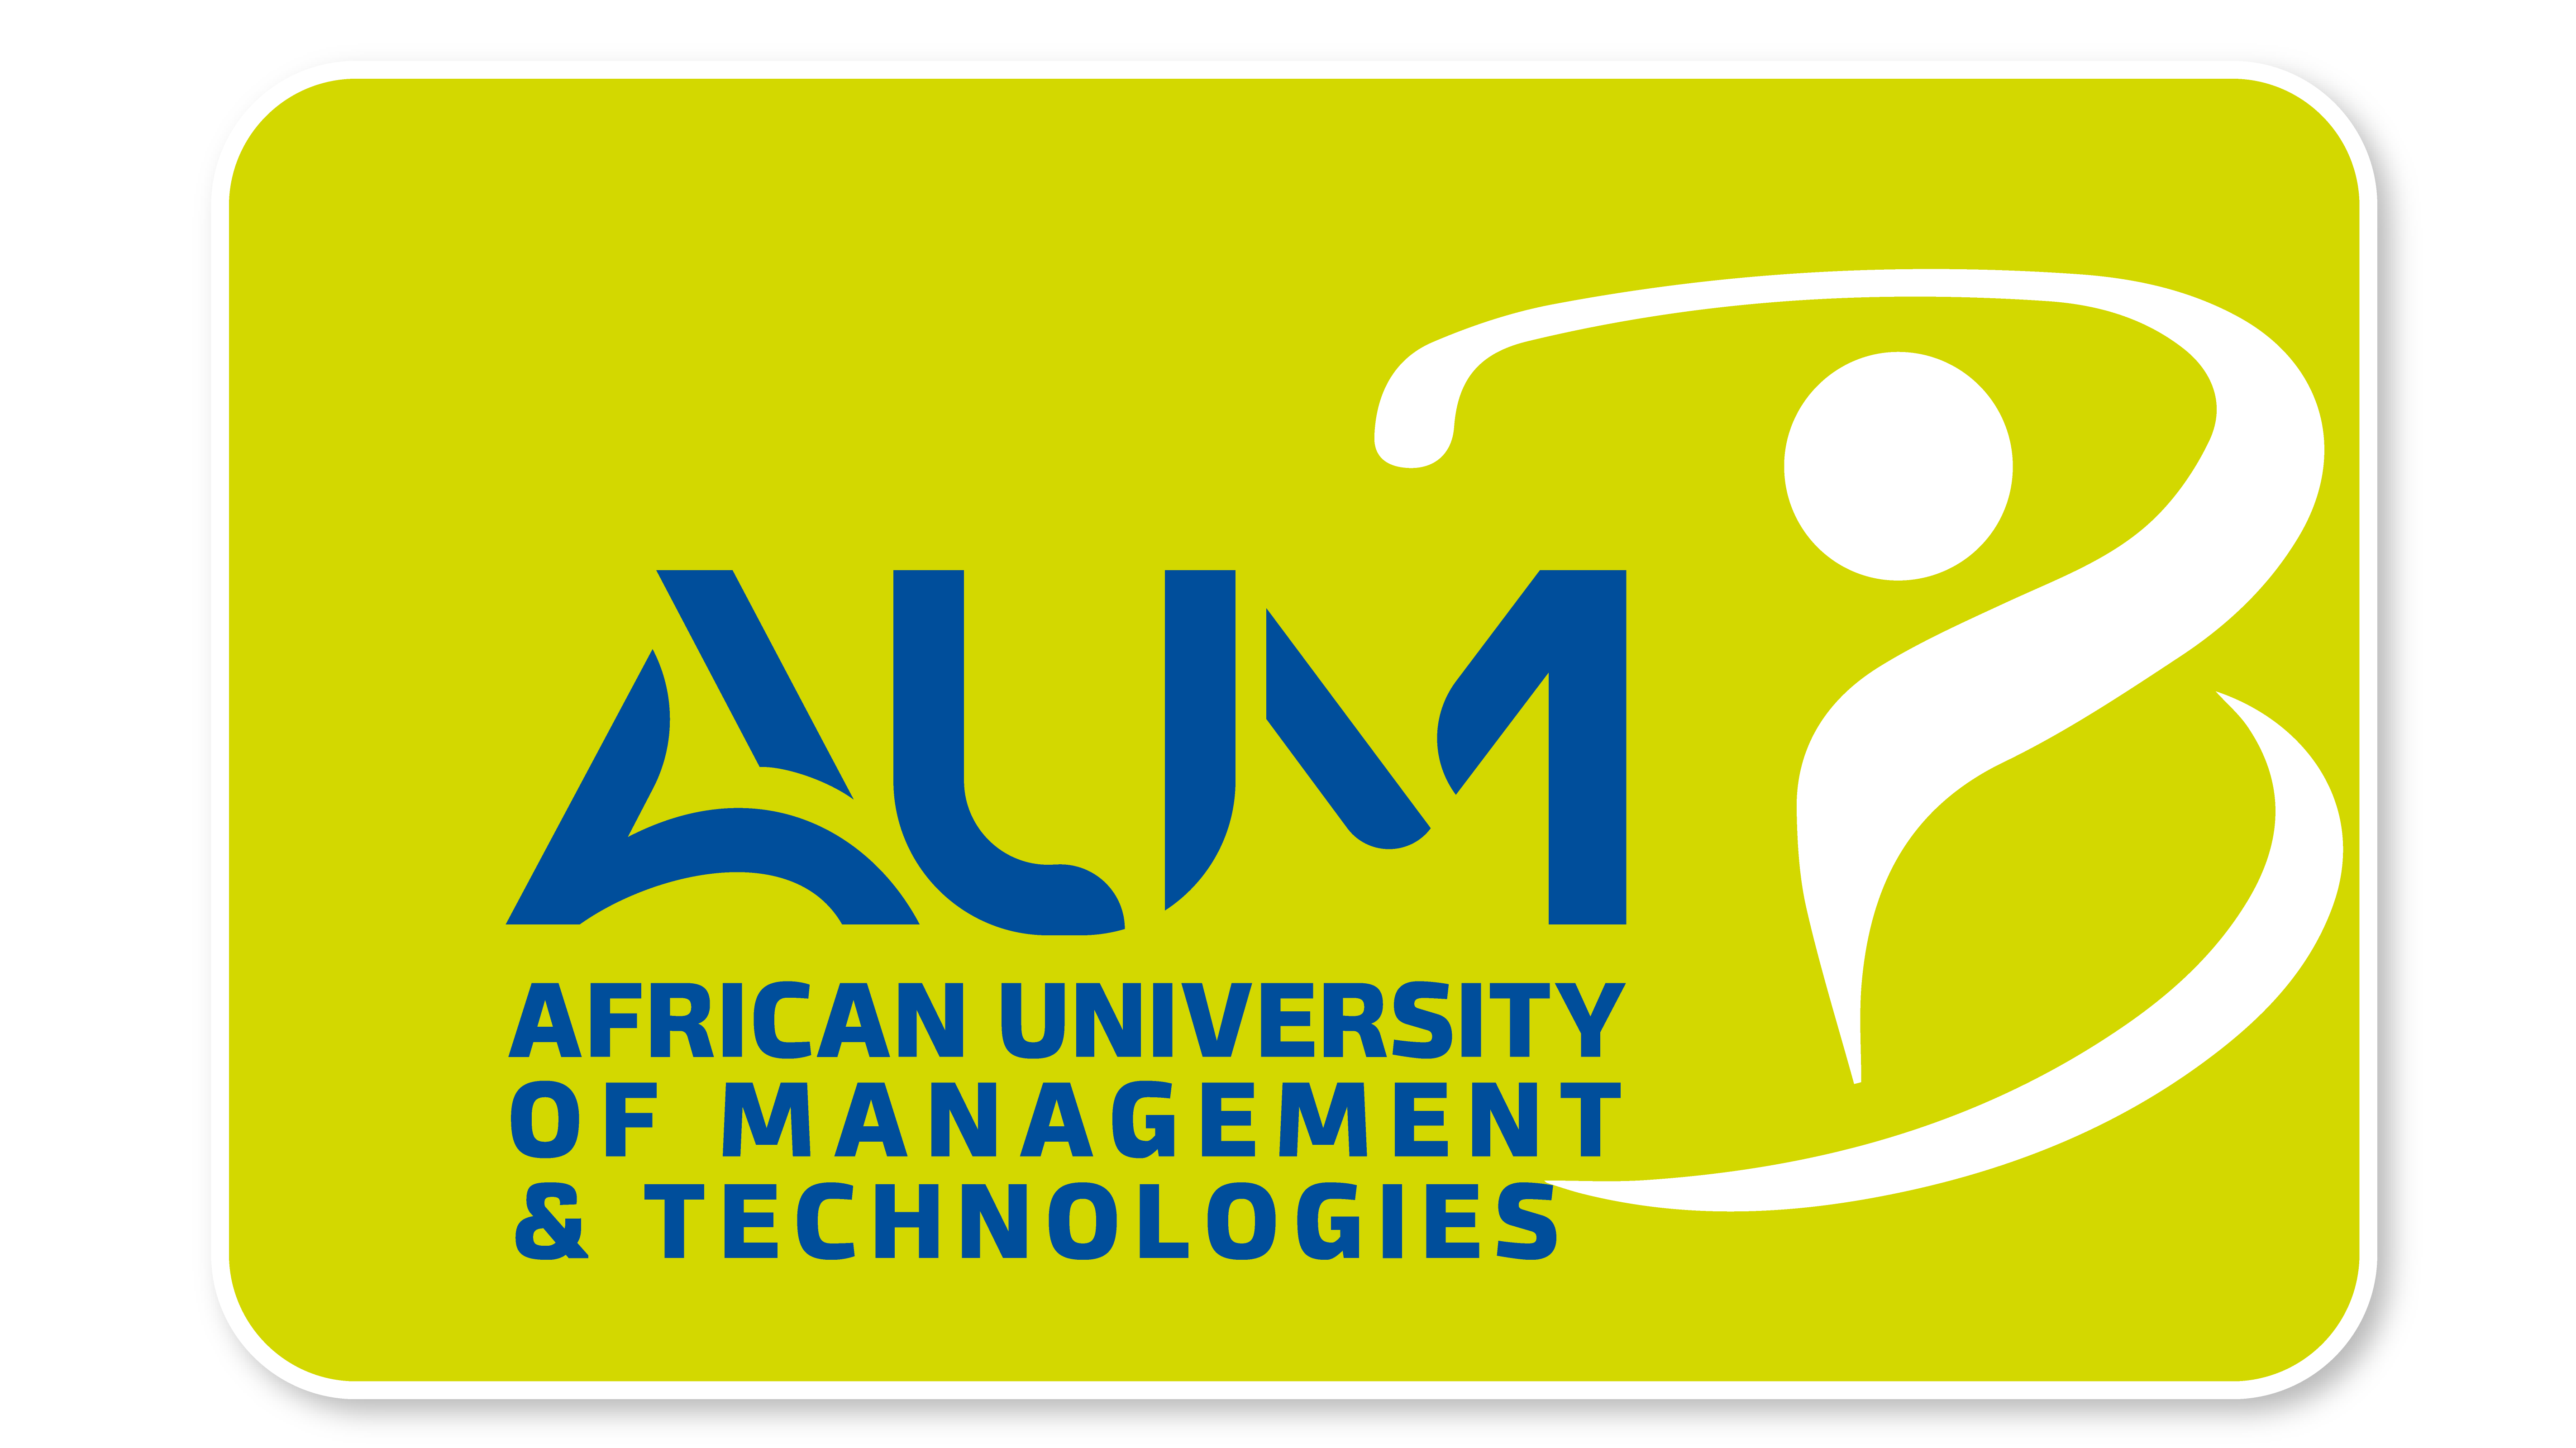 African University of Management & Technologies